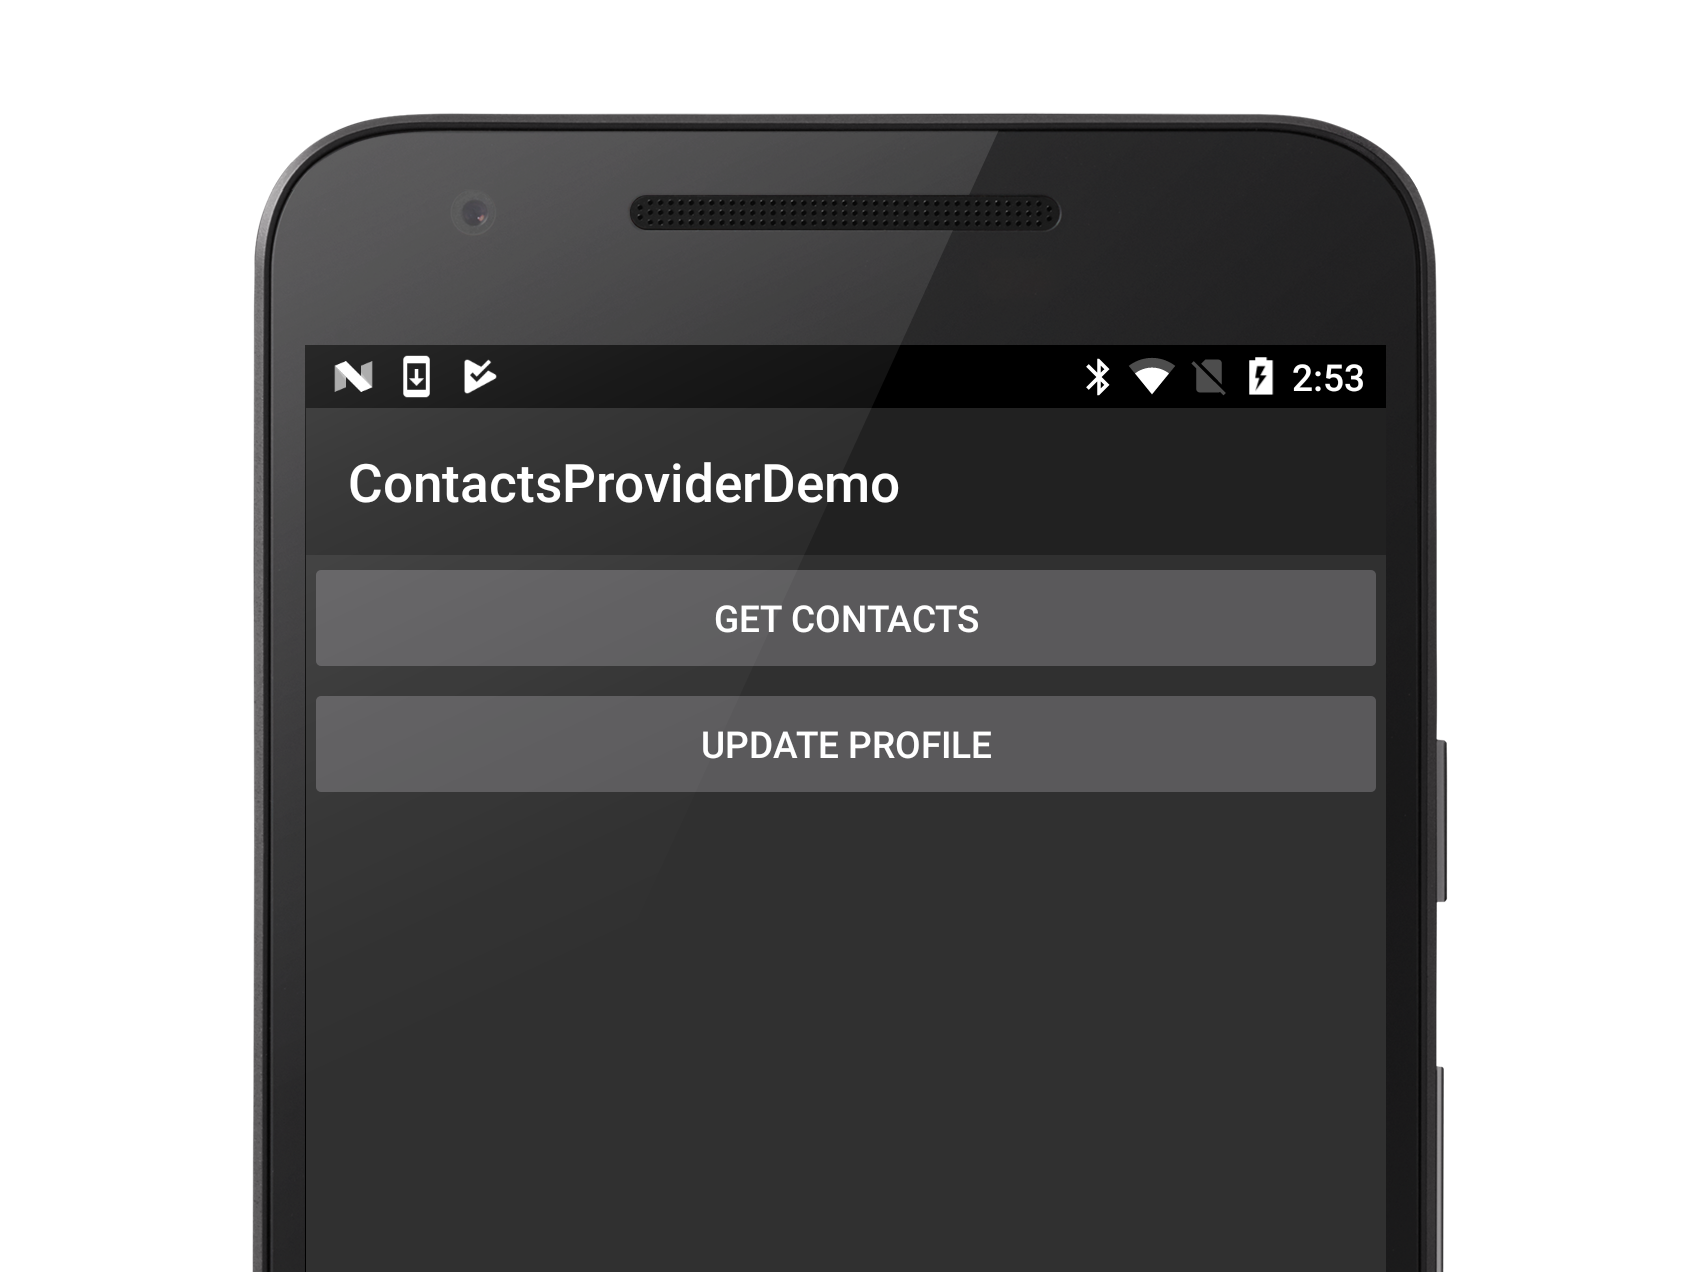 Contacts demo app